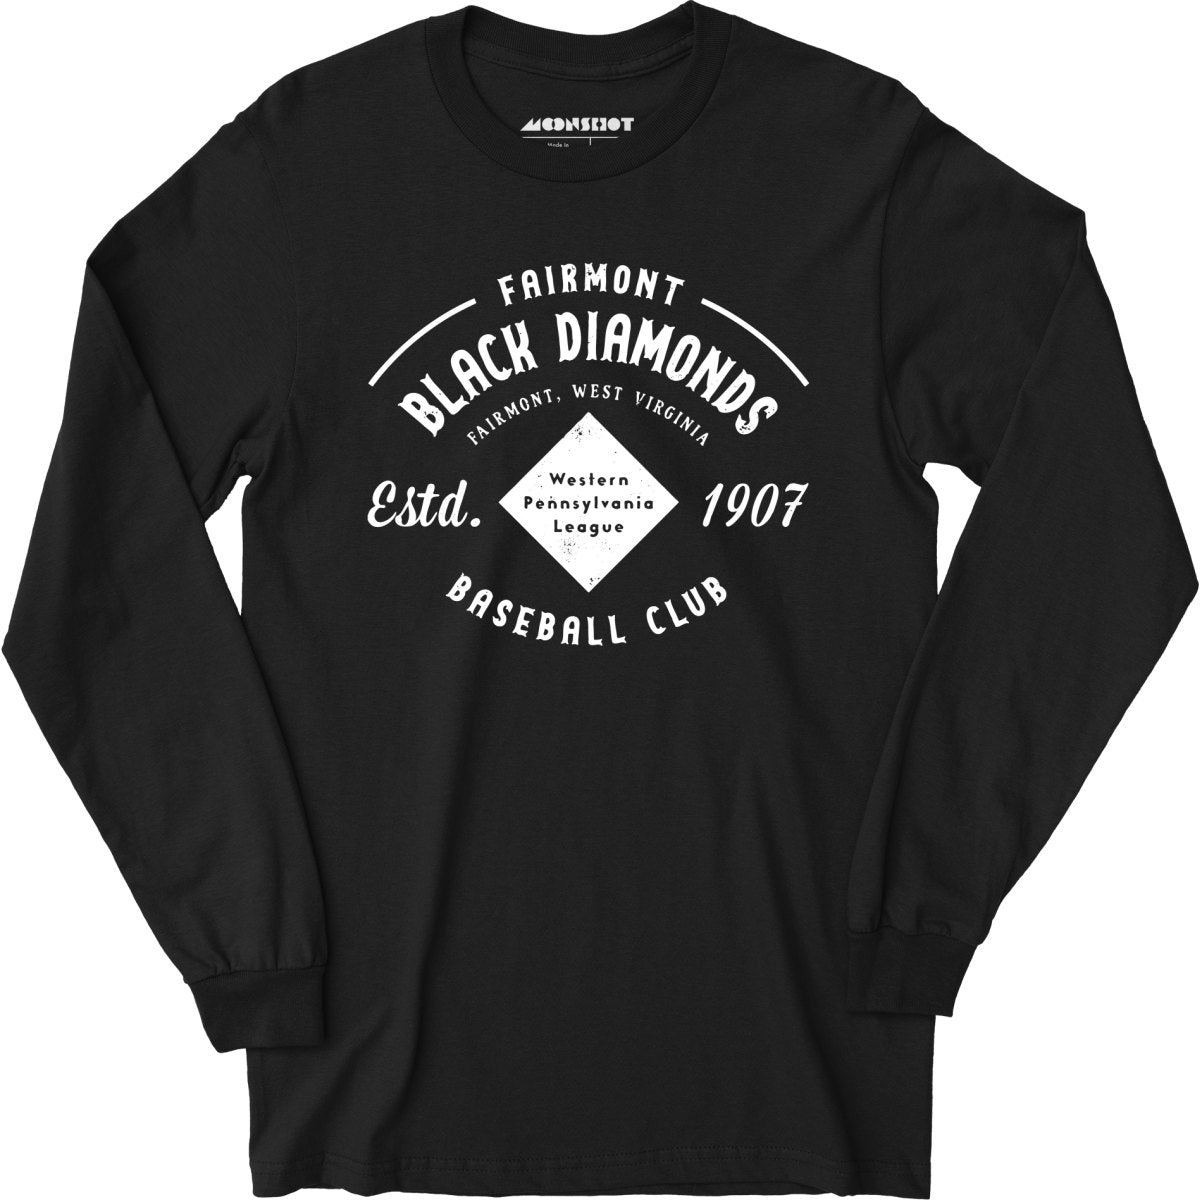 Fairmont Black Diamonds - West Virginia - Vintage Defunct Baseball Teams - Long Sleeve T-Shirt